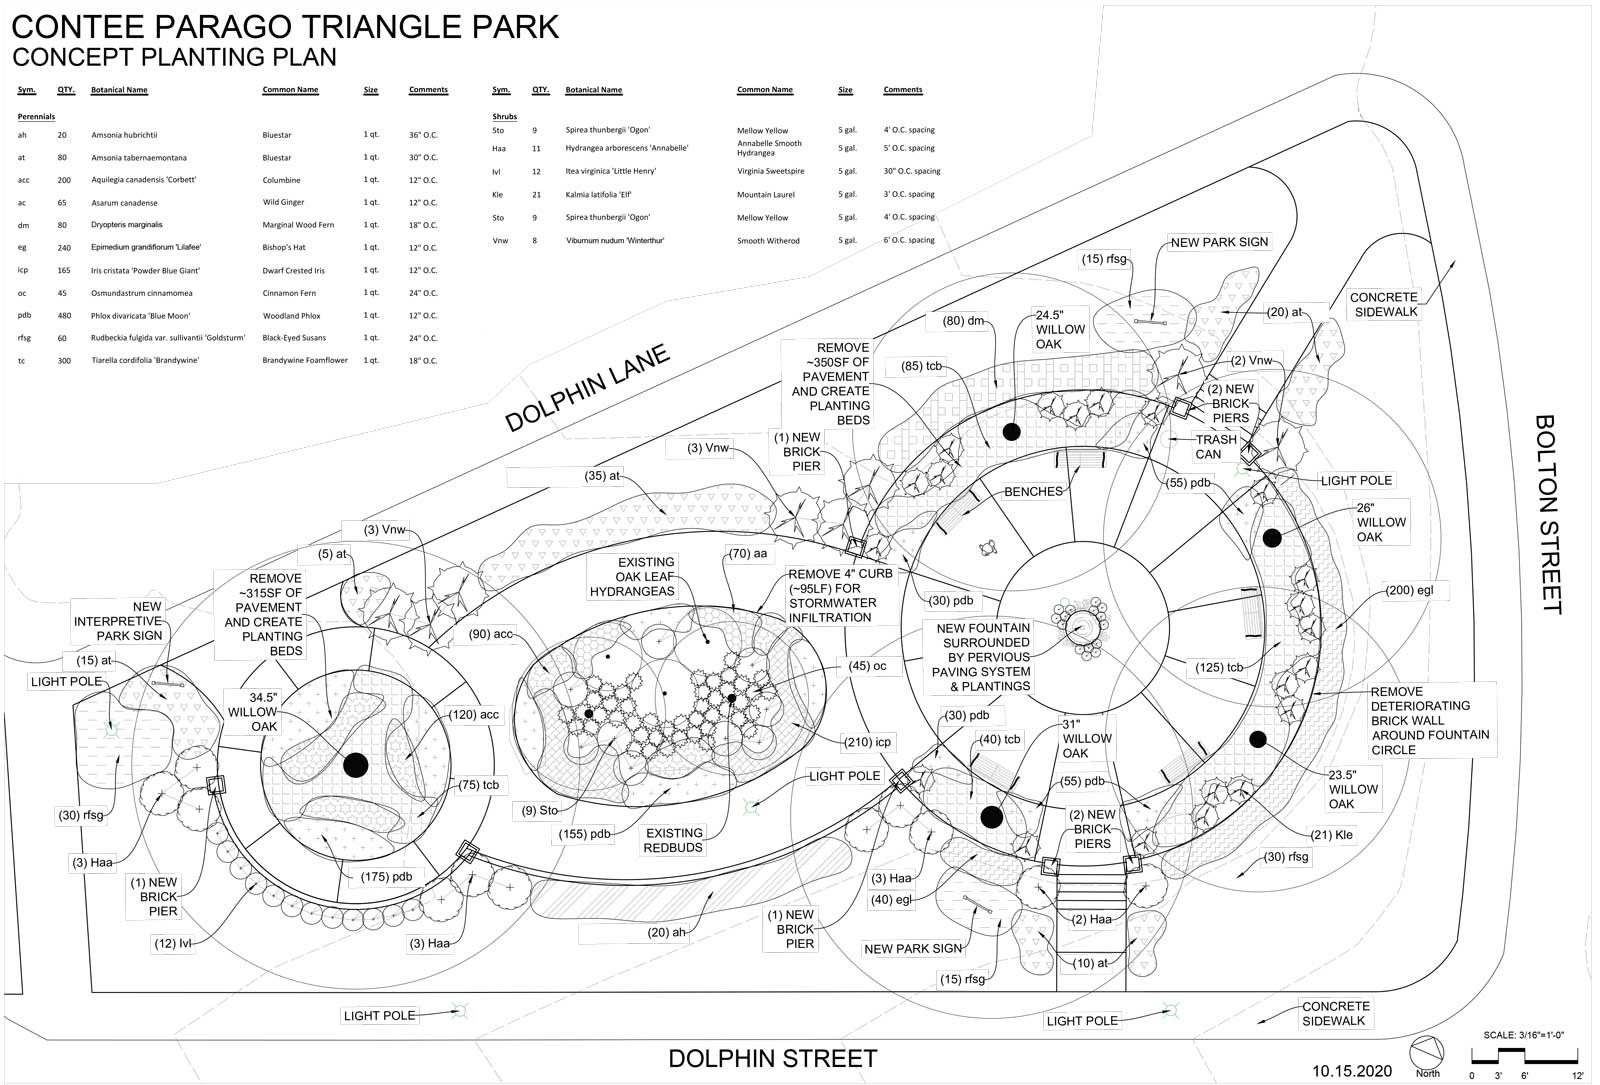 Concept Planting Plan Contee Parago Triangle Park